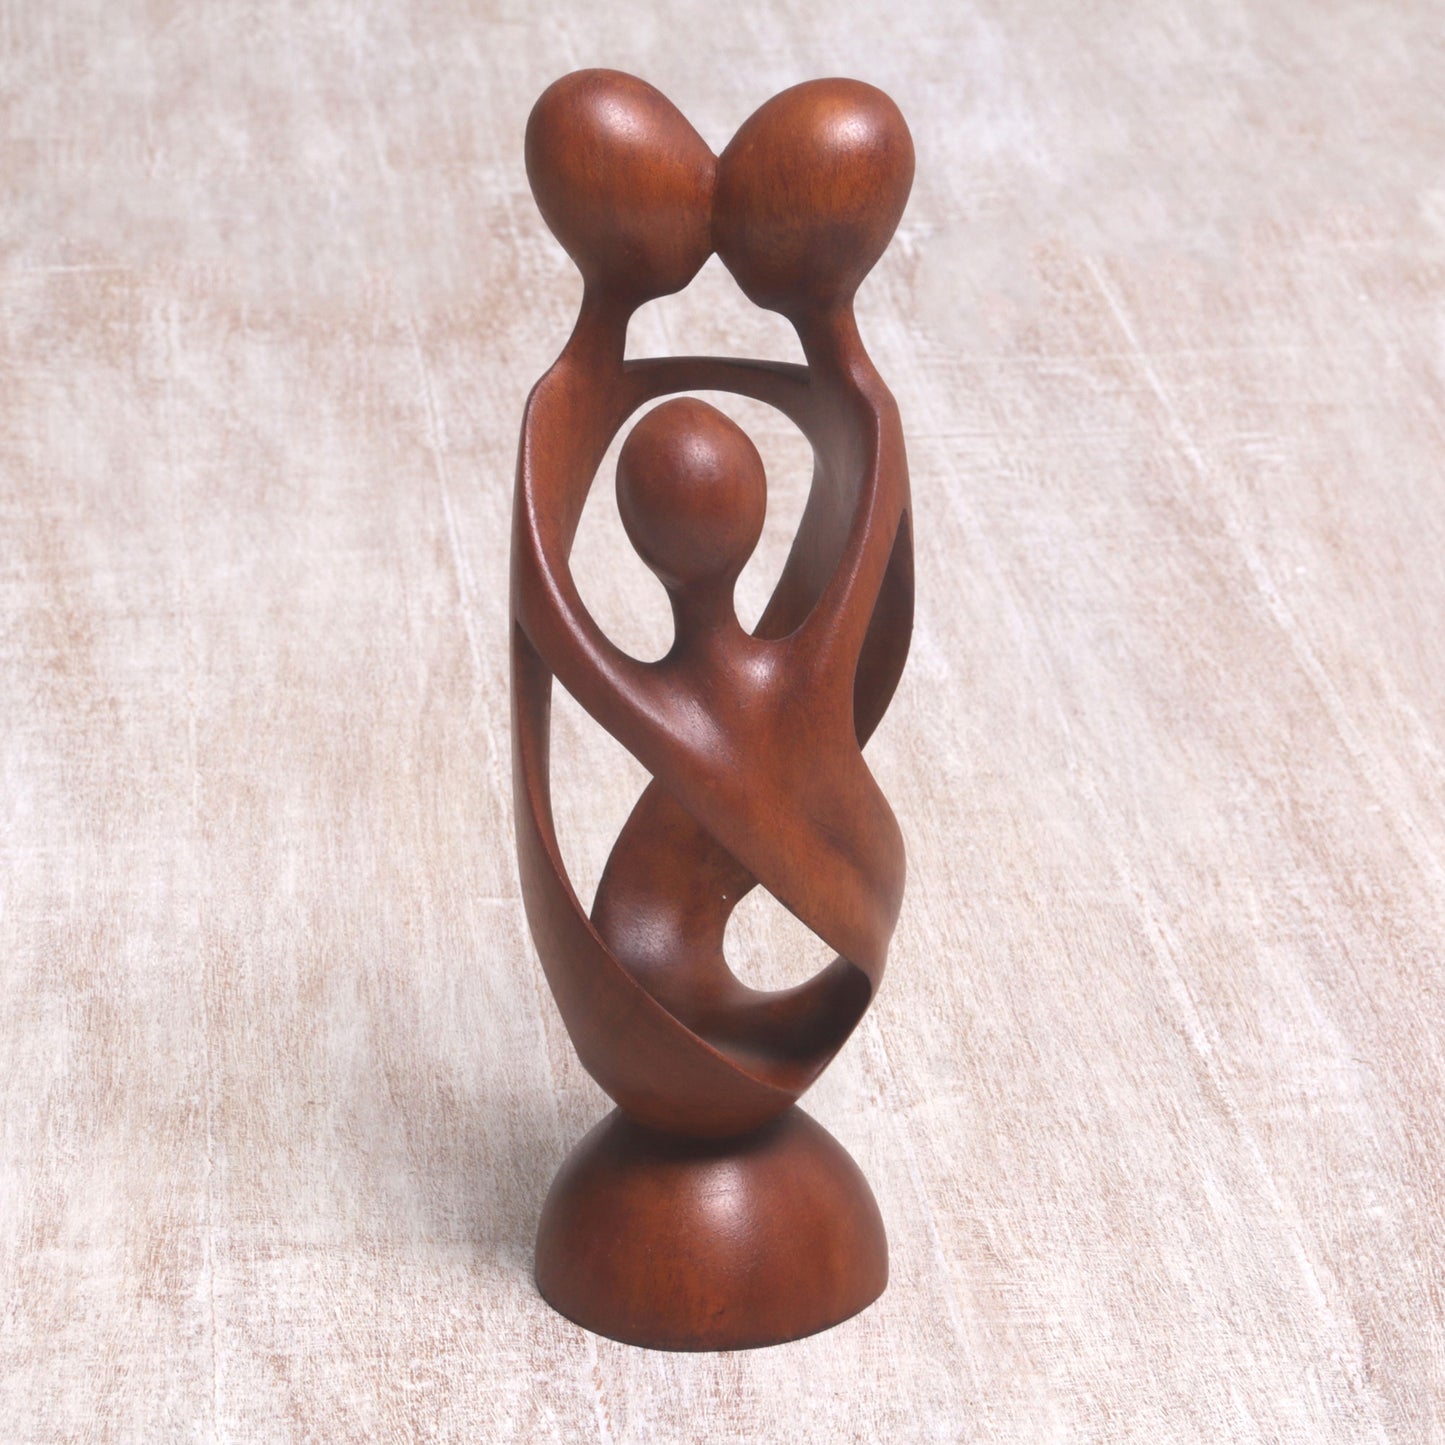 Family Spiral Wood Sculpture